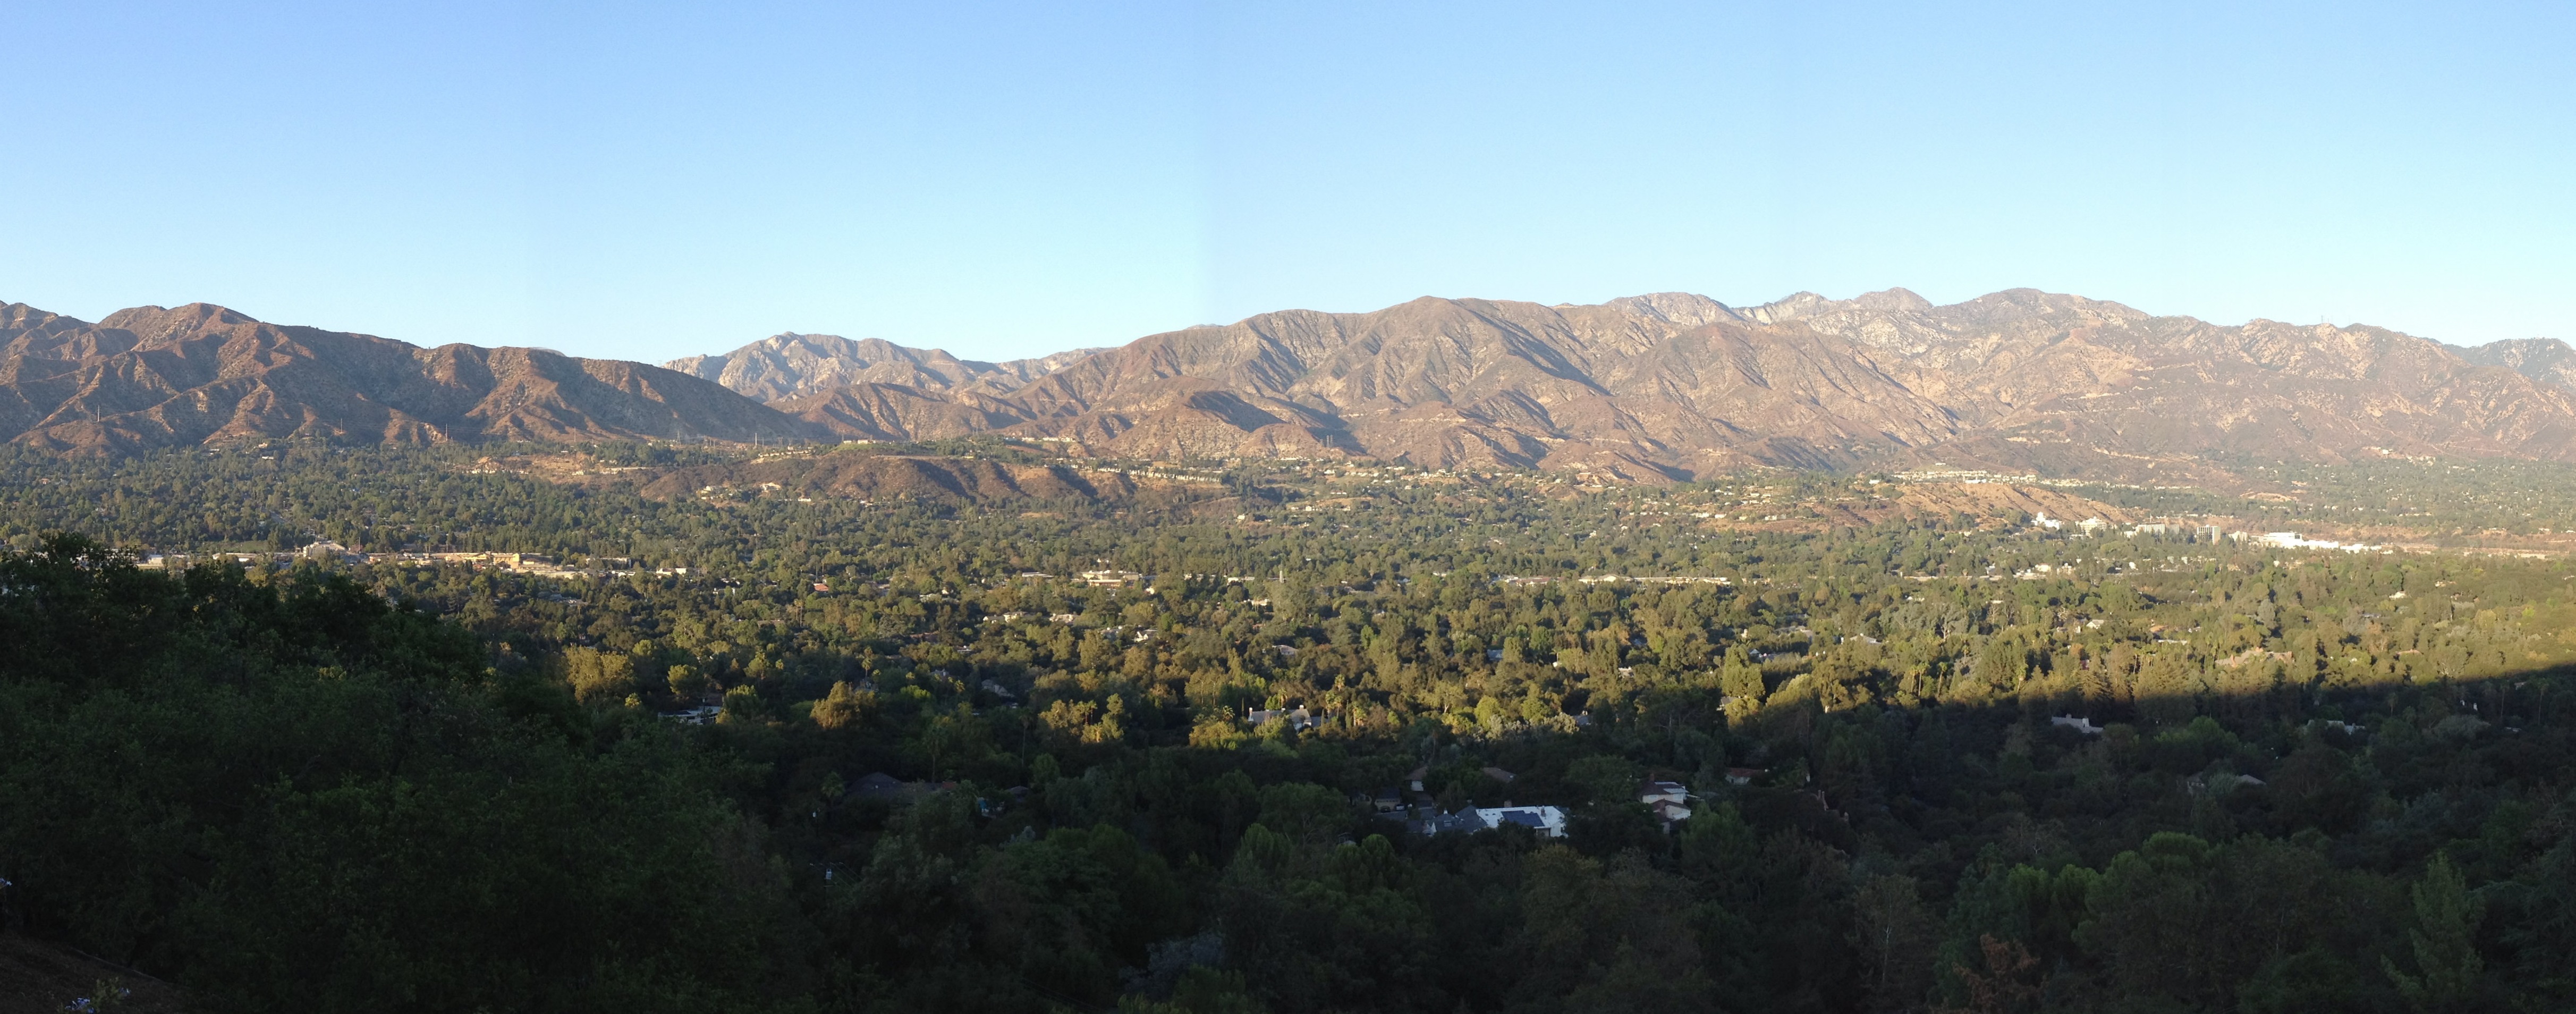 Panoramic view of San Gabriel Mountains from La Canada Flintridge, California.